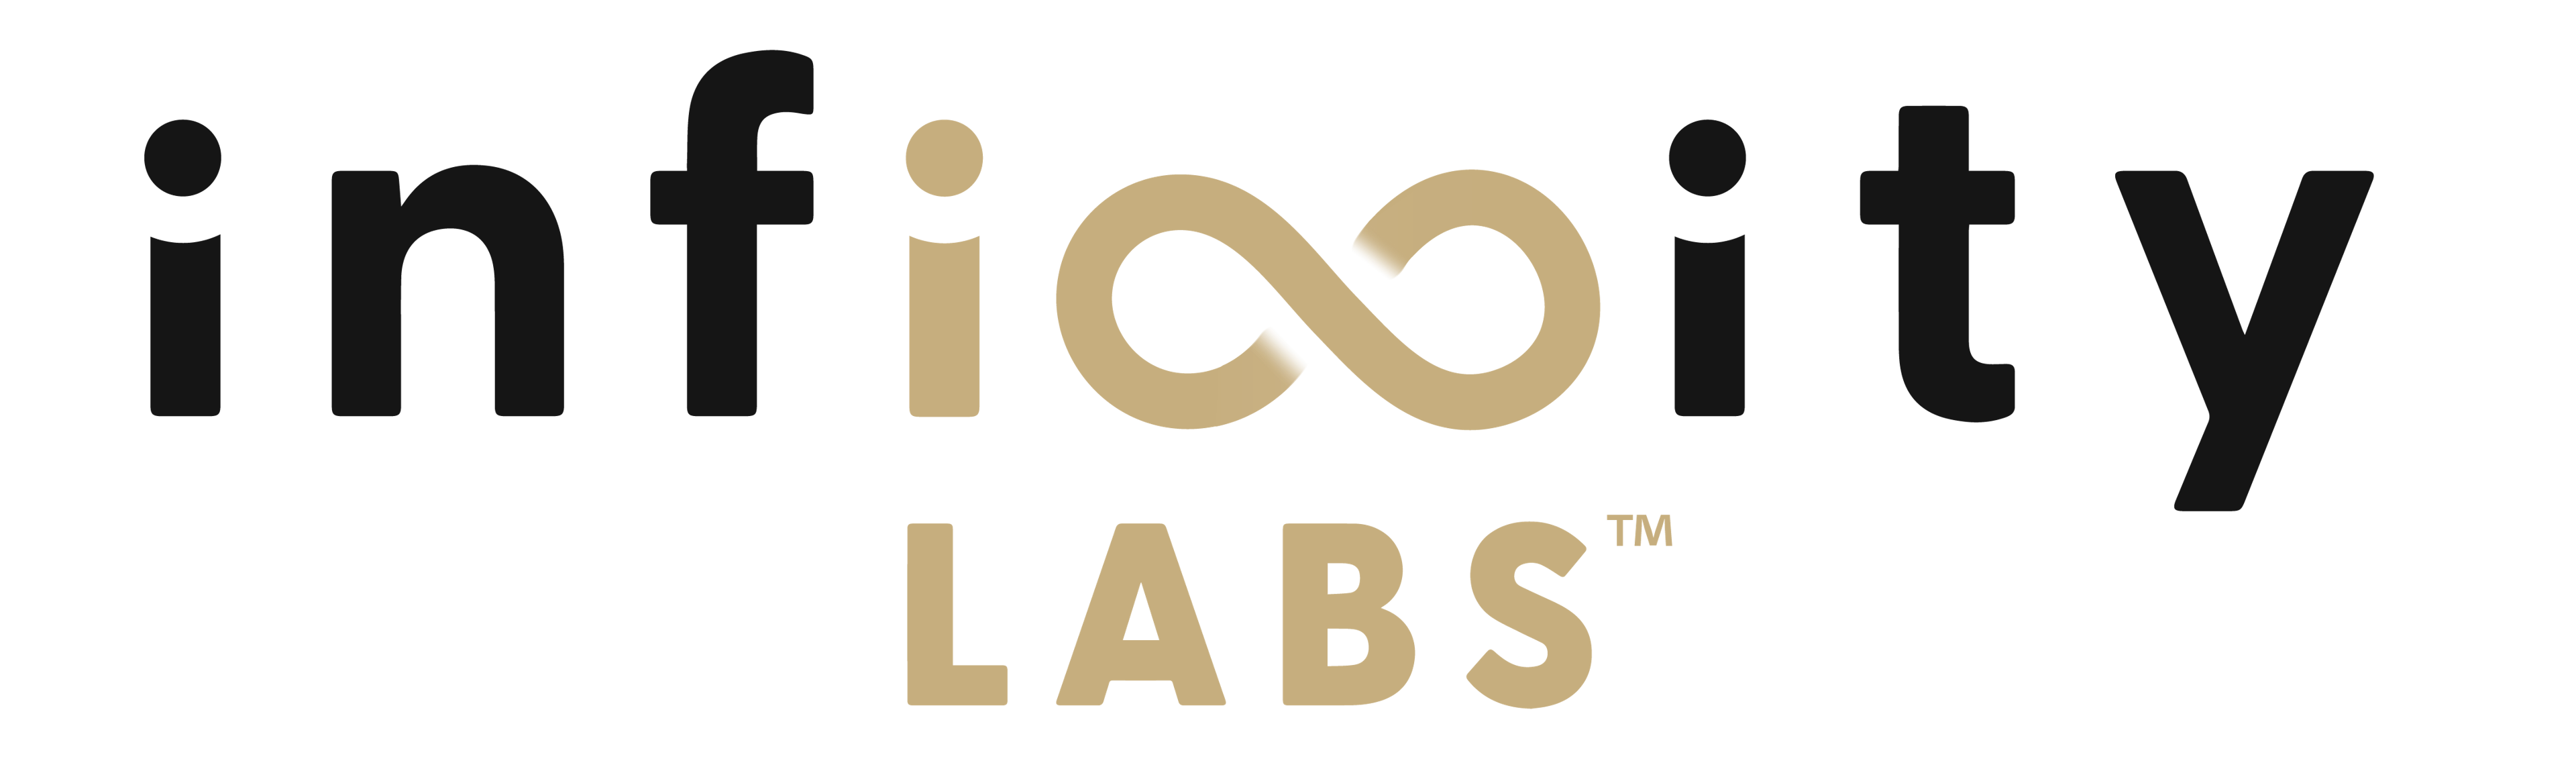 Infinity Labs logo